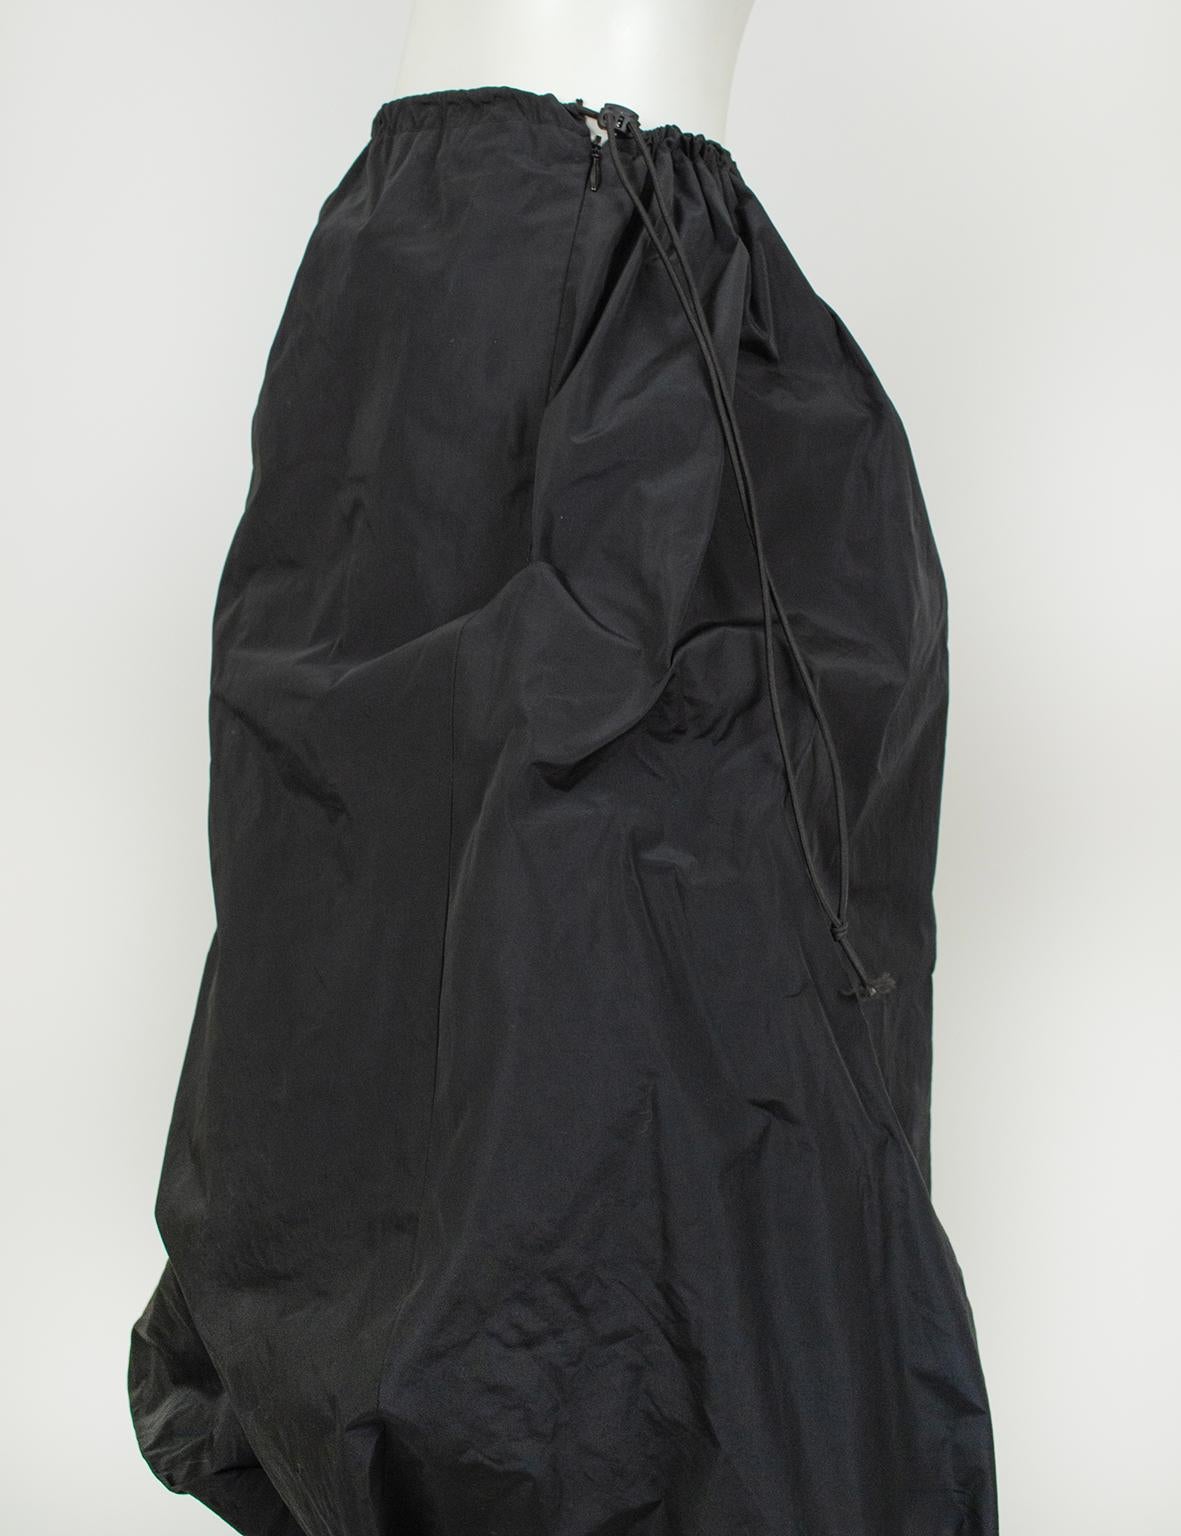 New Japanese Avant Garde Black Nylon Parachute Bubble Midi Skirt – S-M, 2018 In New Condition For Sale In Tucson, AZ